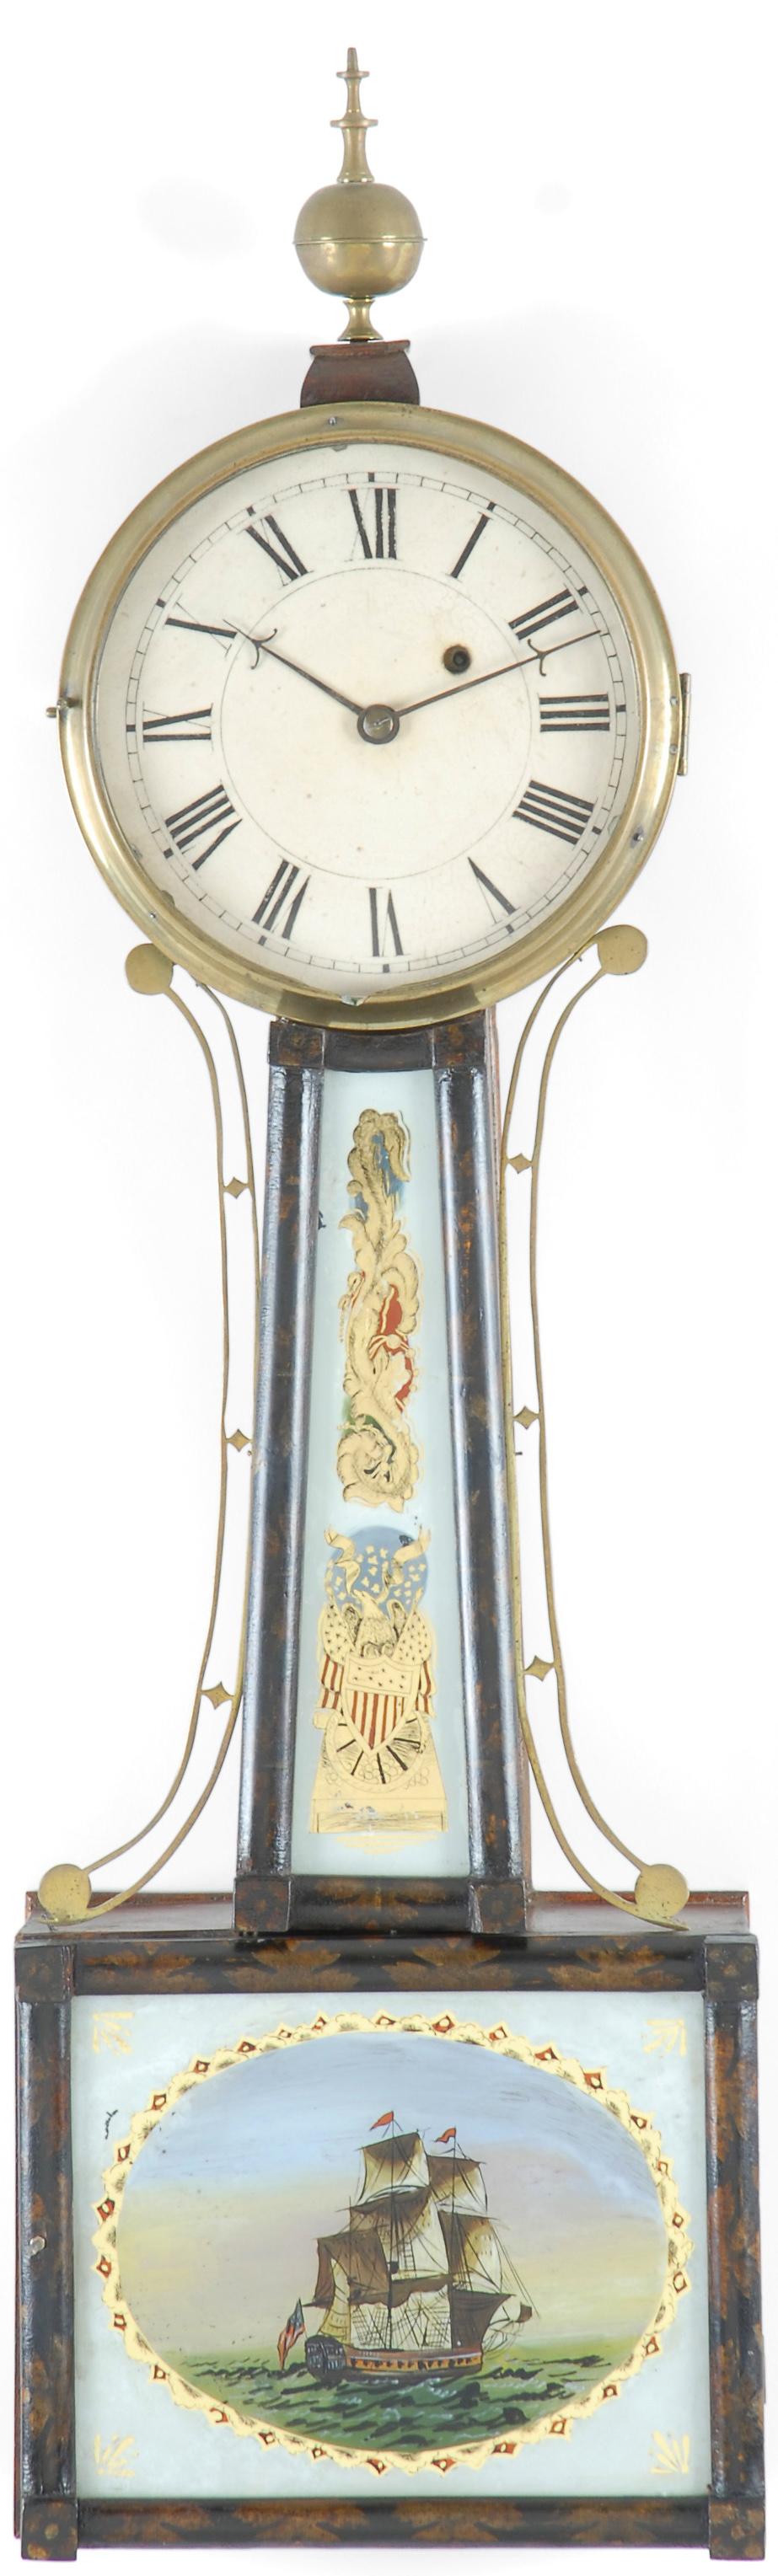 A handsome patent time piece with stenciled frames, Simon Willard & Son, Roxbury, Mass, circa 1827.